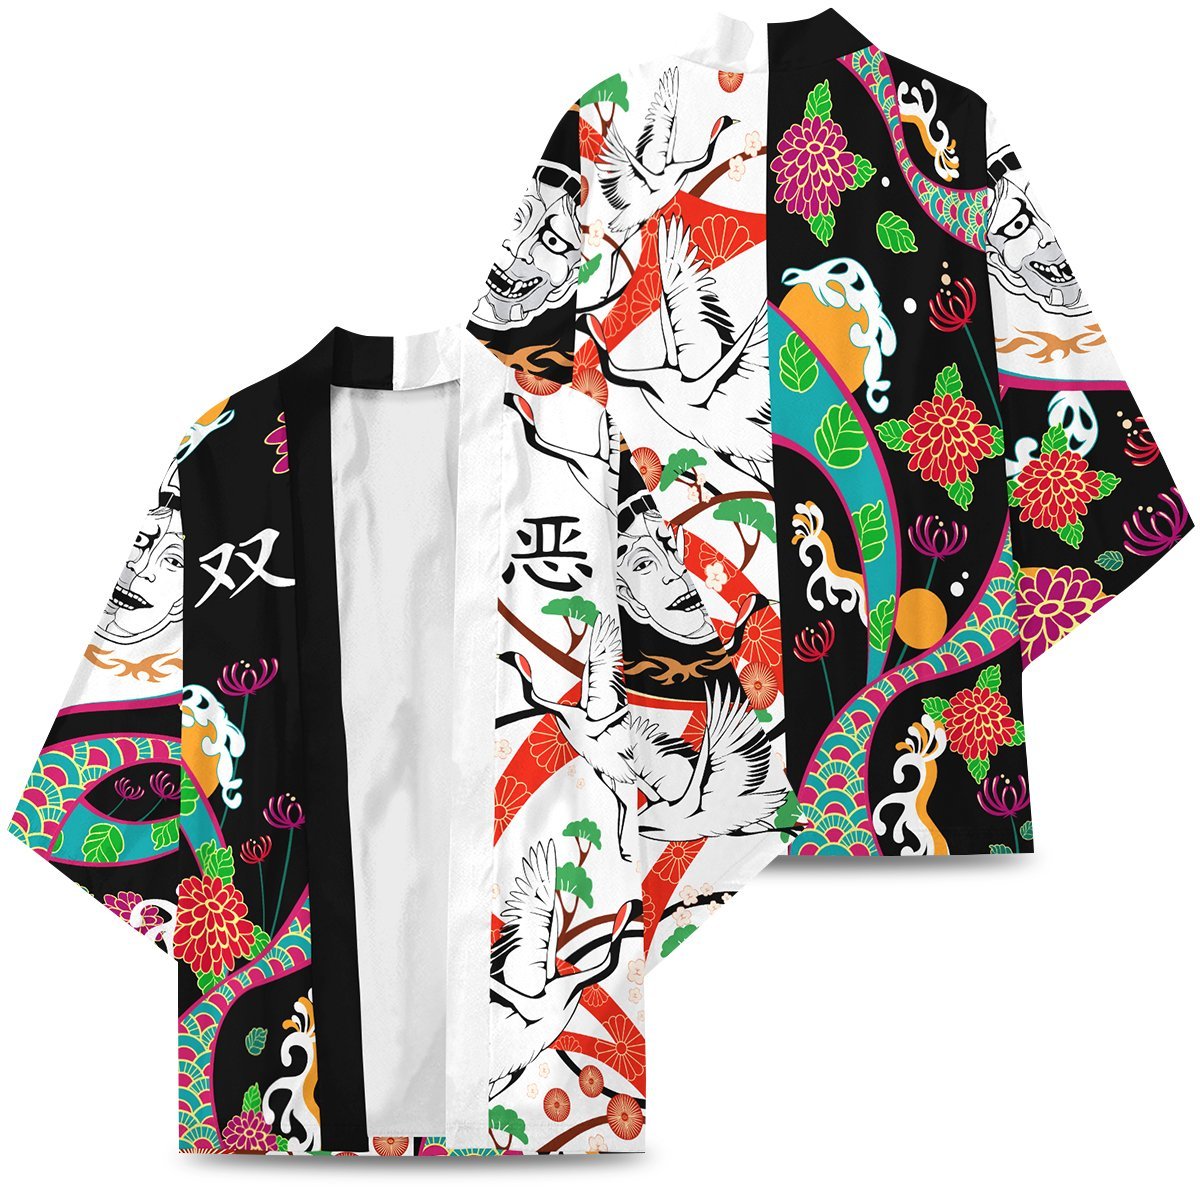 souya x nahoya kimono 178106 - Otaku Treat